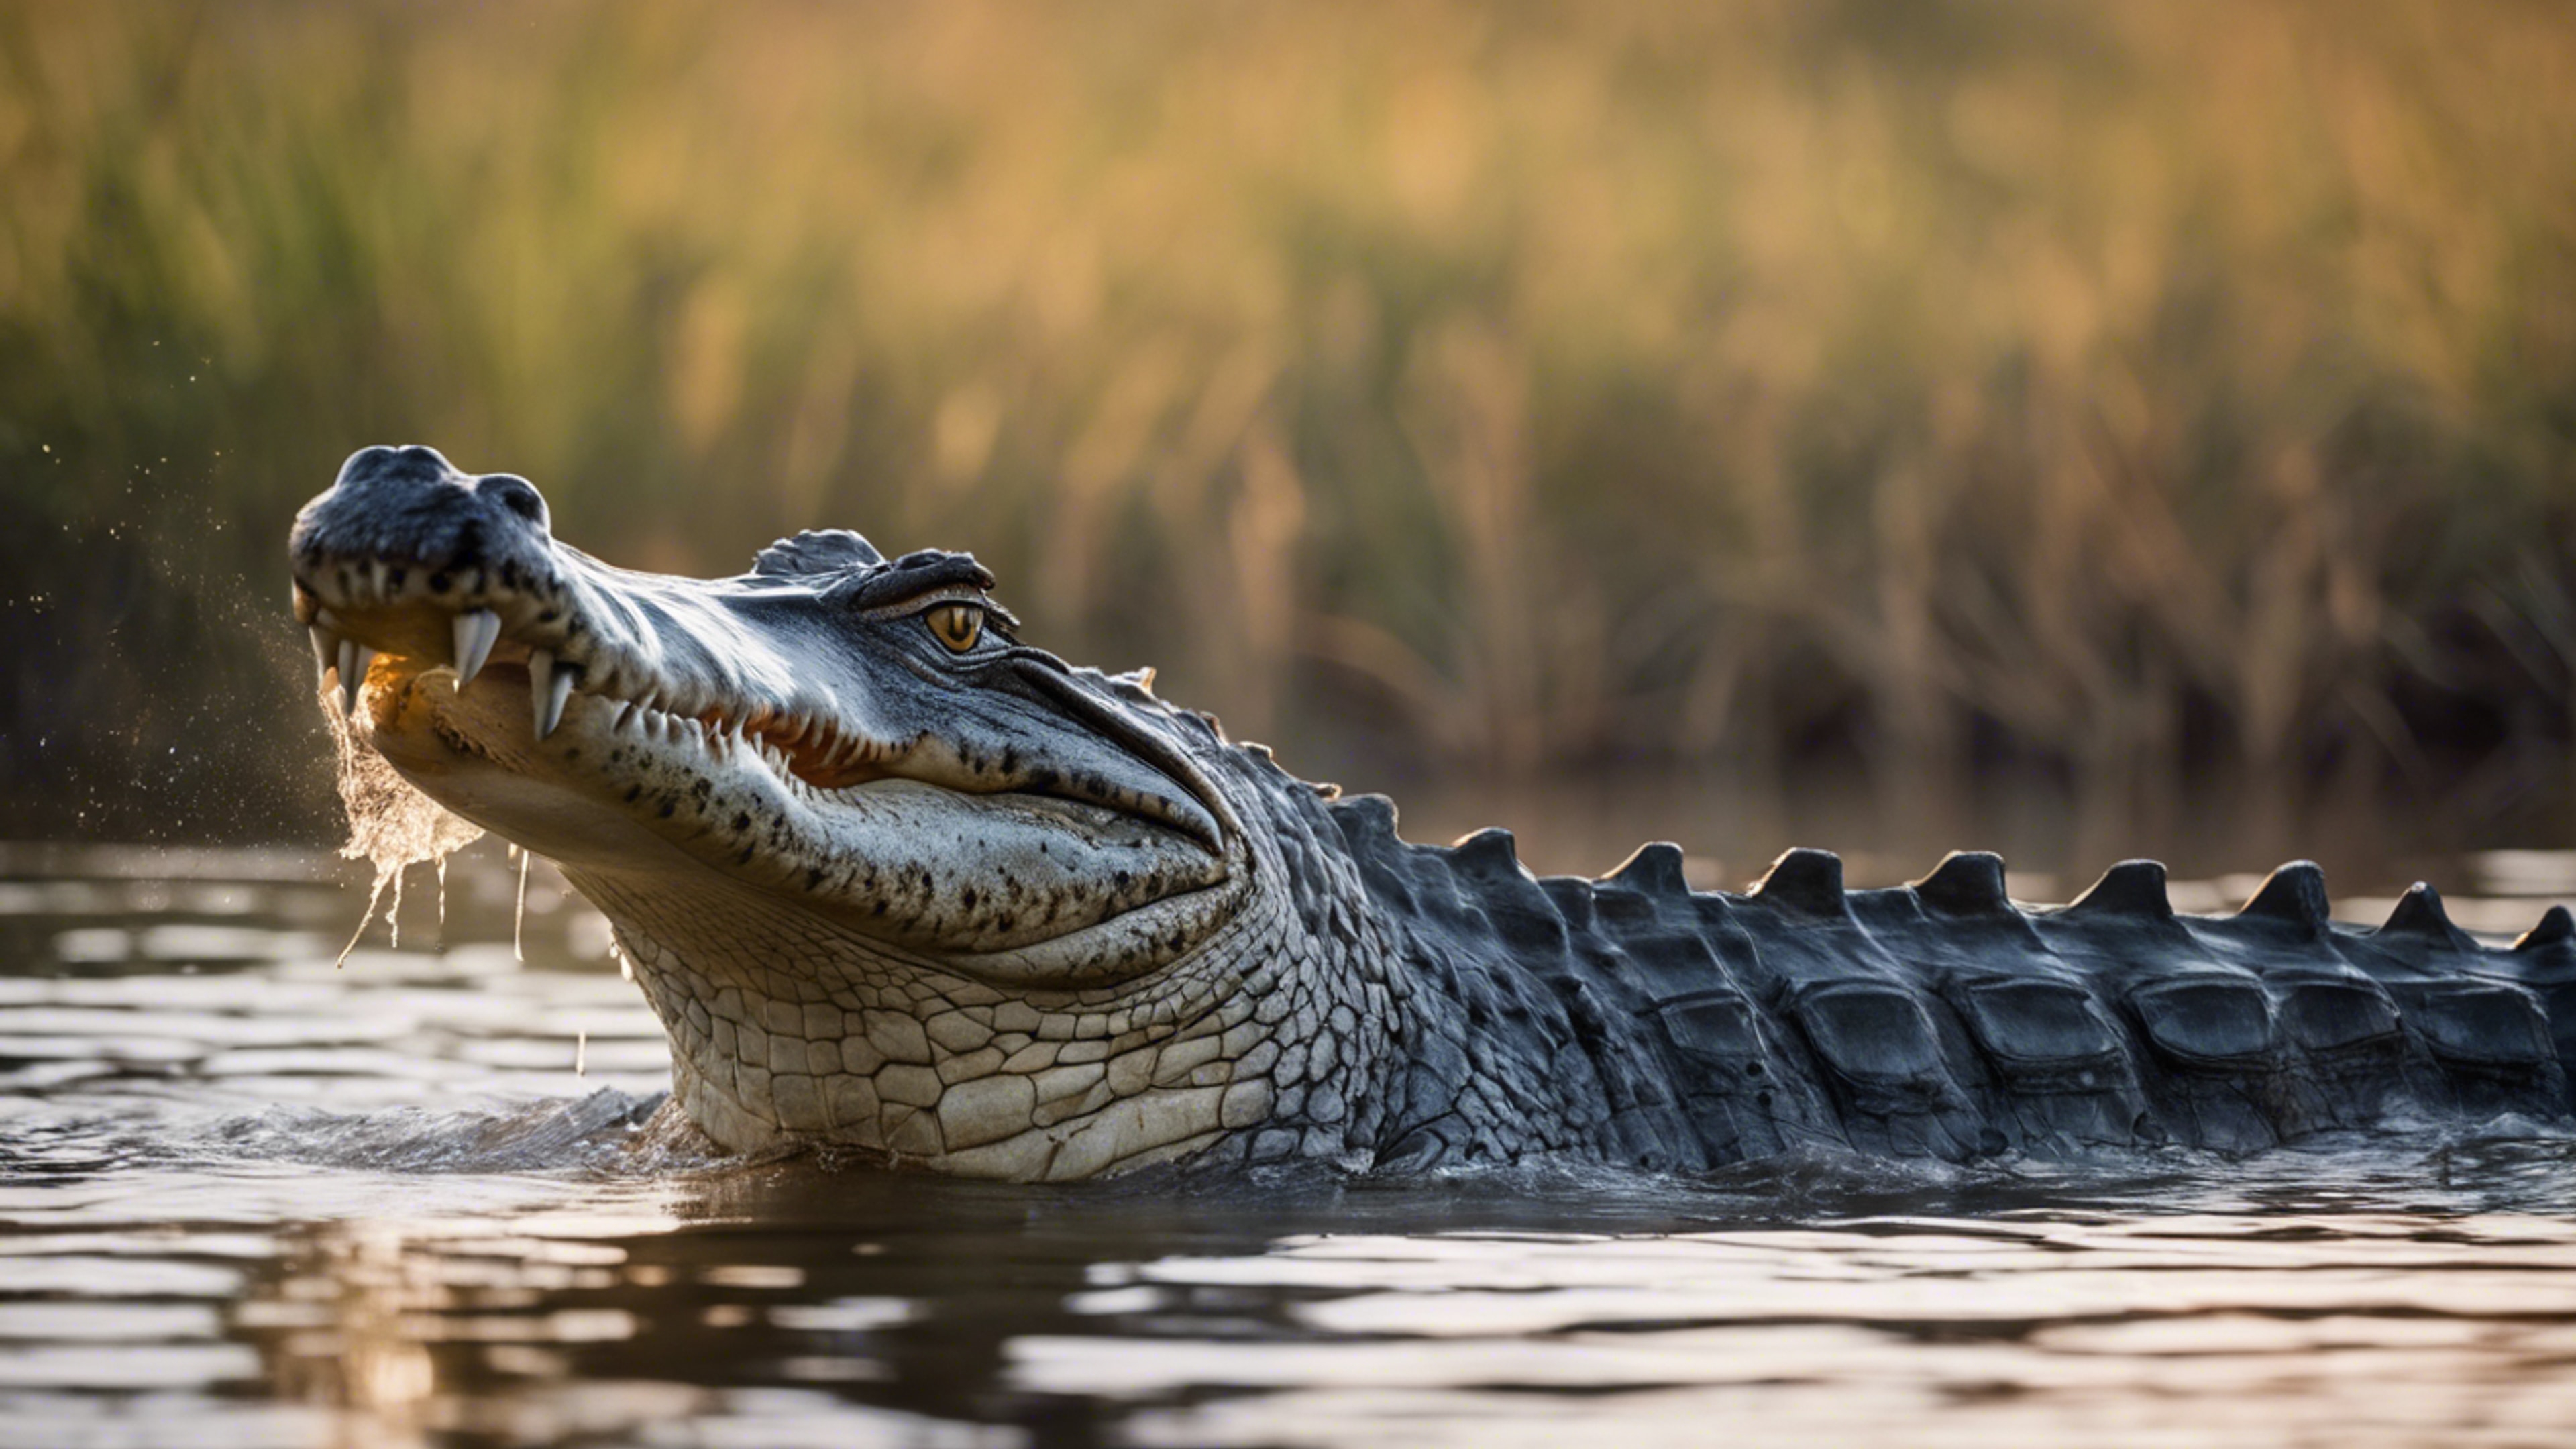 A glorious scene of a crocodile in the heart of the Okavango Delta. Taustakuva[926204686e5b483ca4a6]